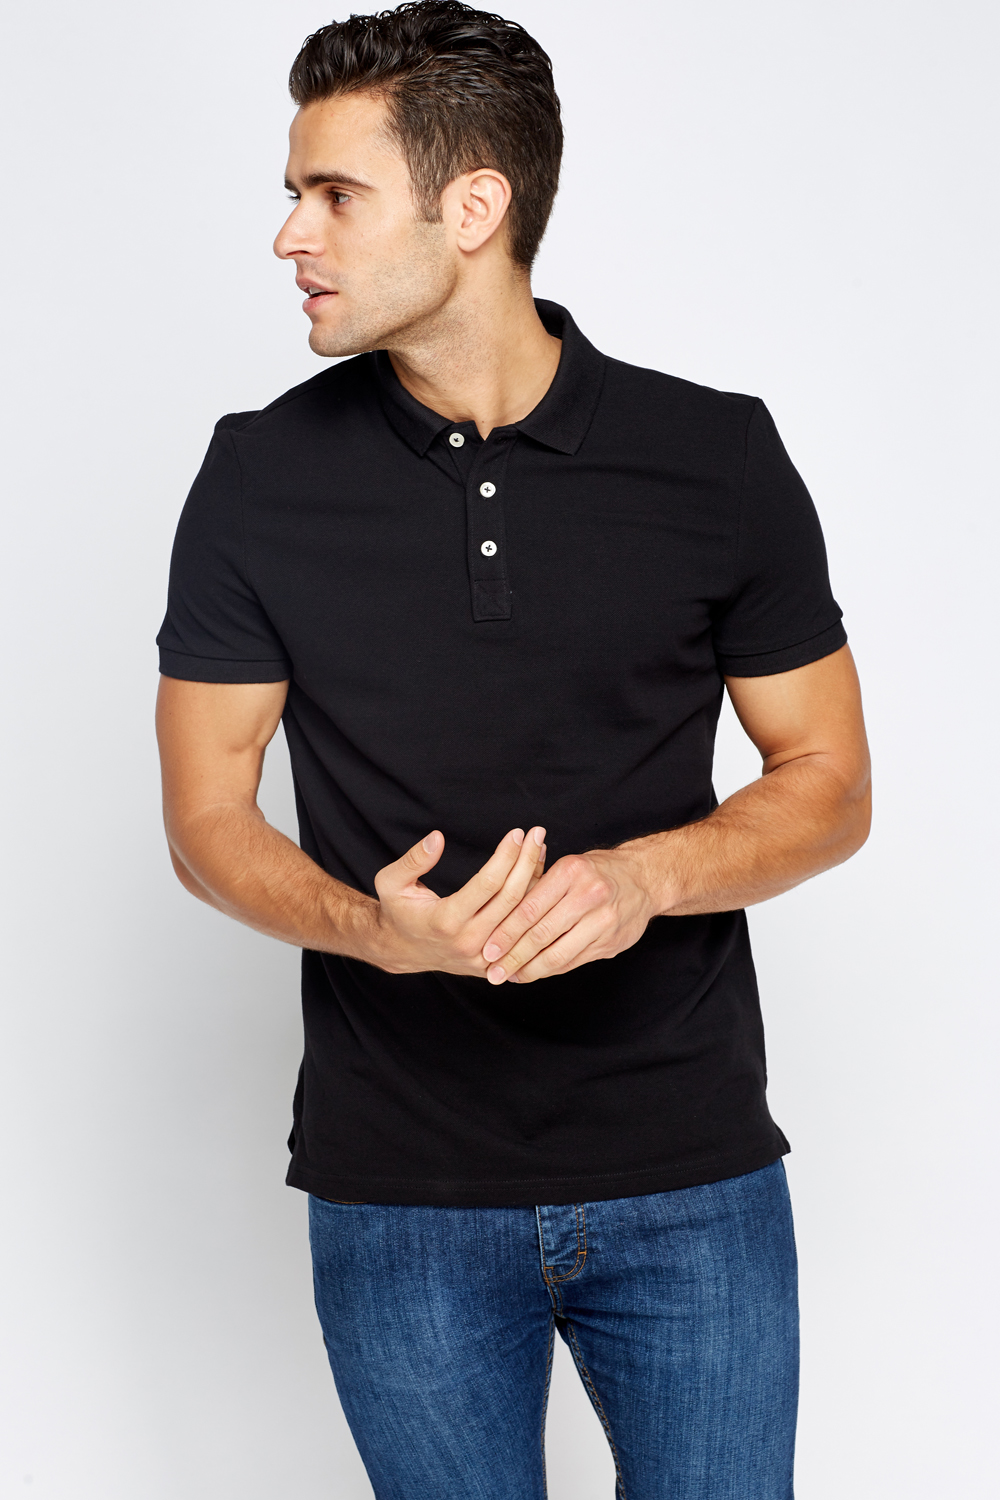 Basic Polo T-Shirt - Just $6